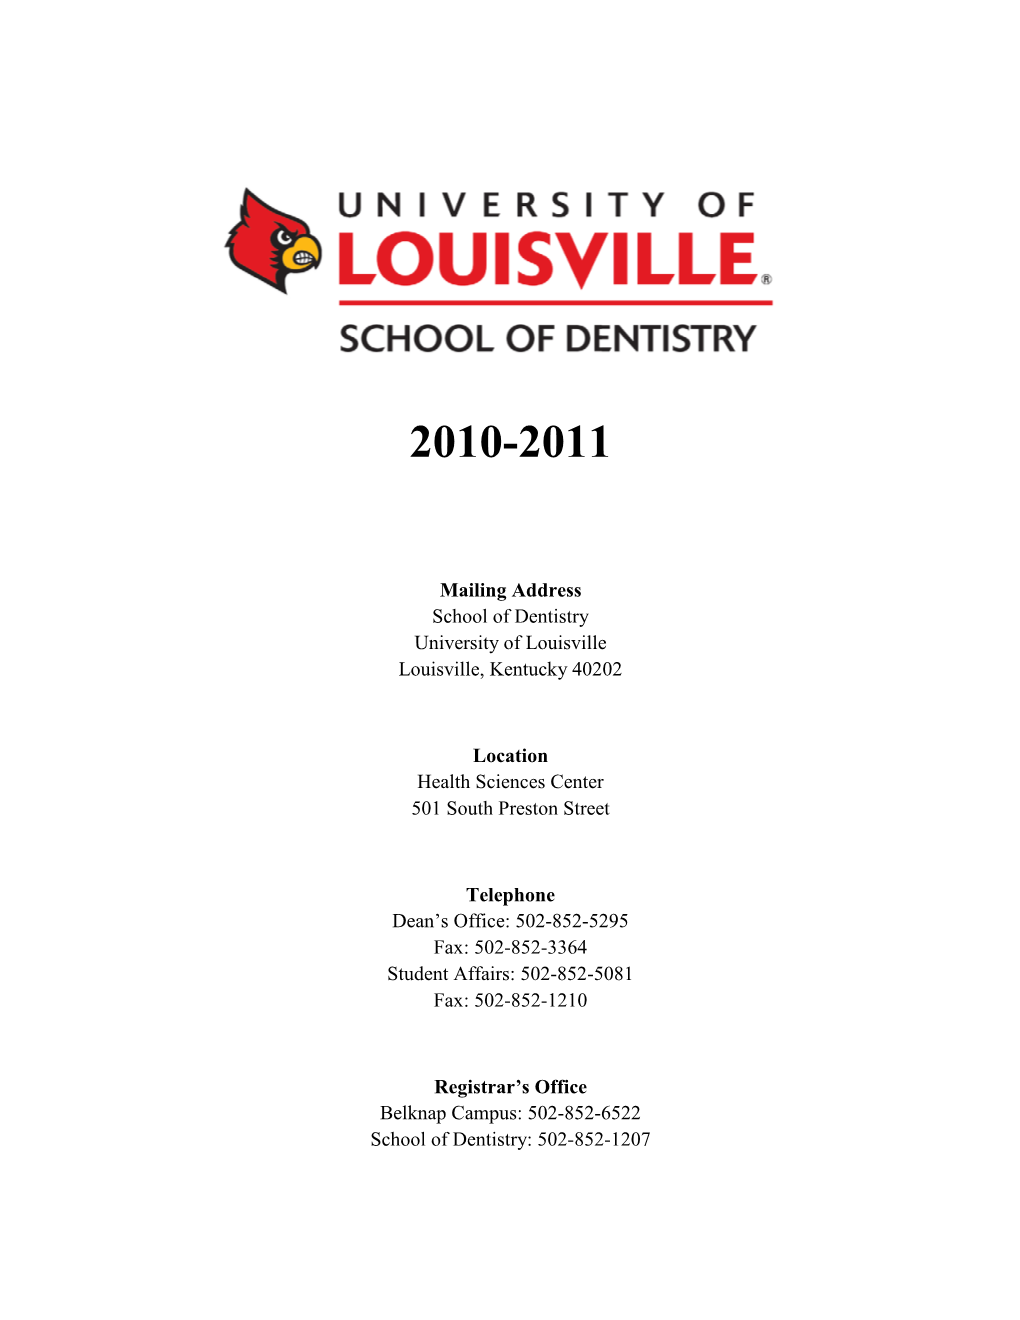 Mailing Address School of Dentistry University of Louisville Louisville, Kentucky 40202